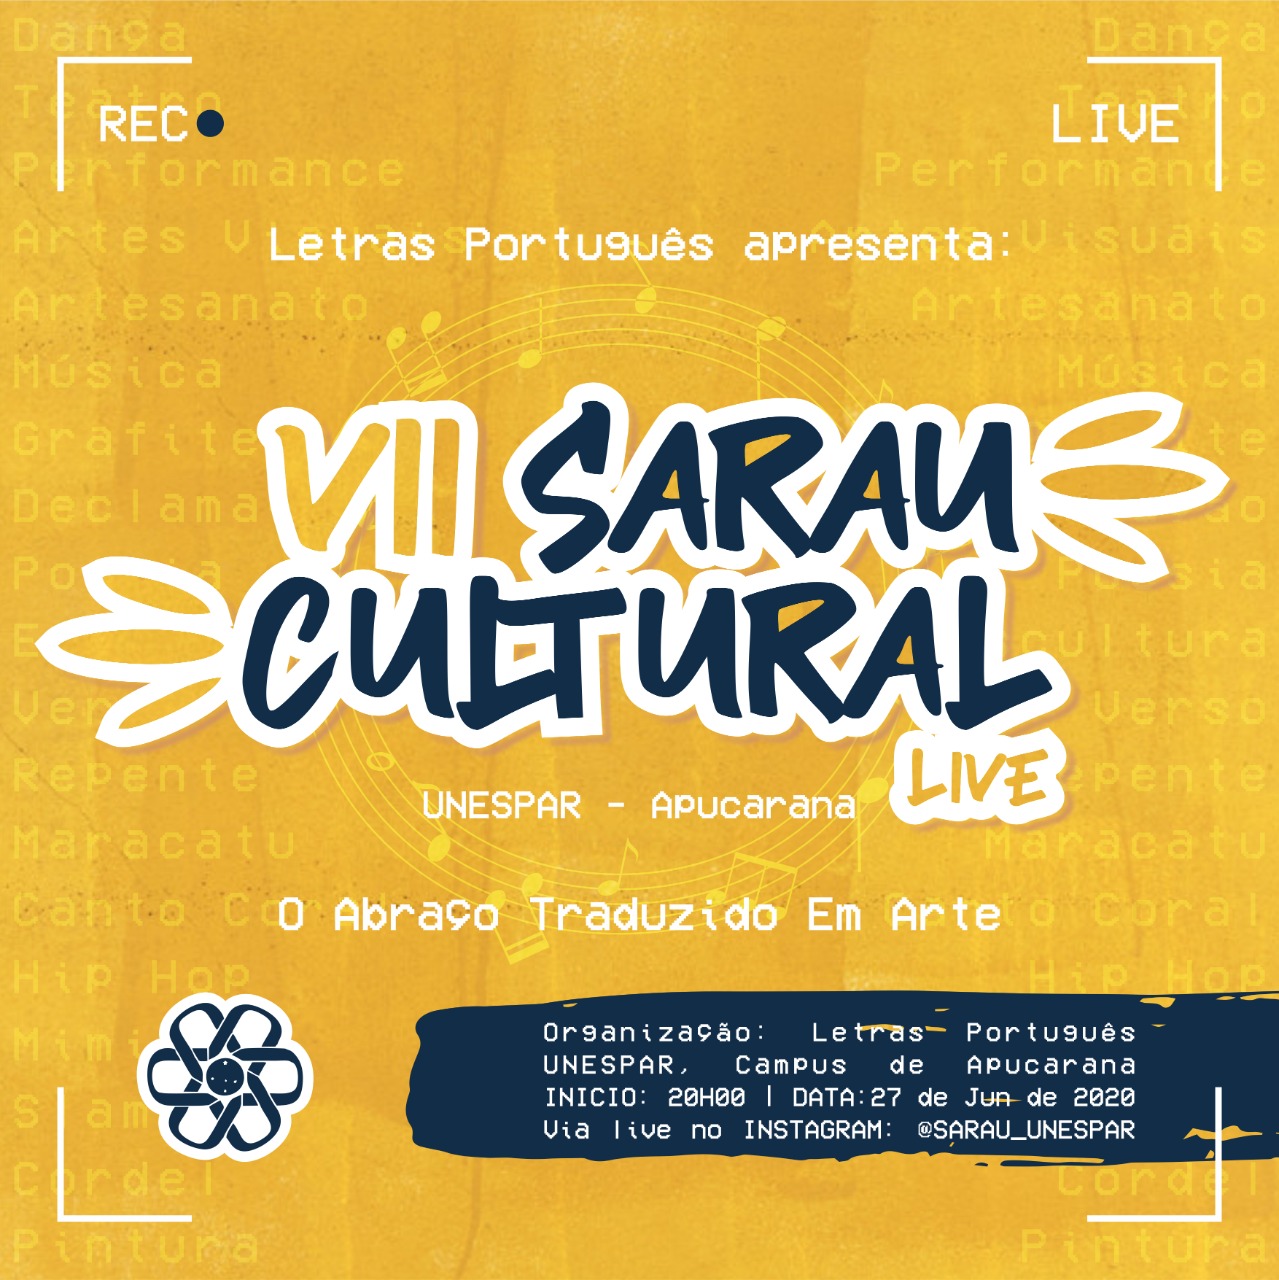 VII Sarau Cultural